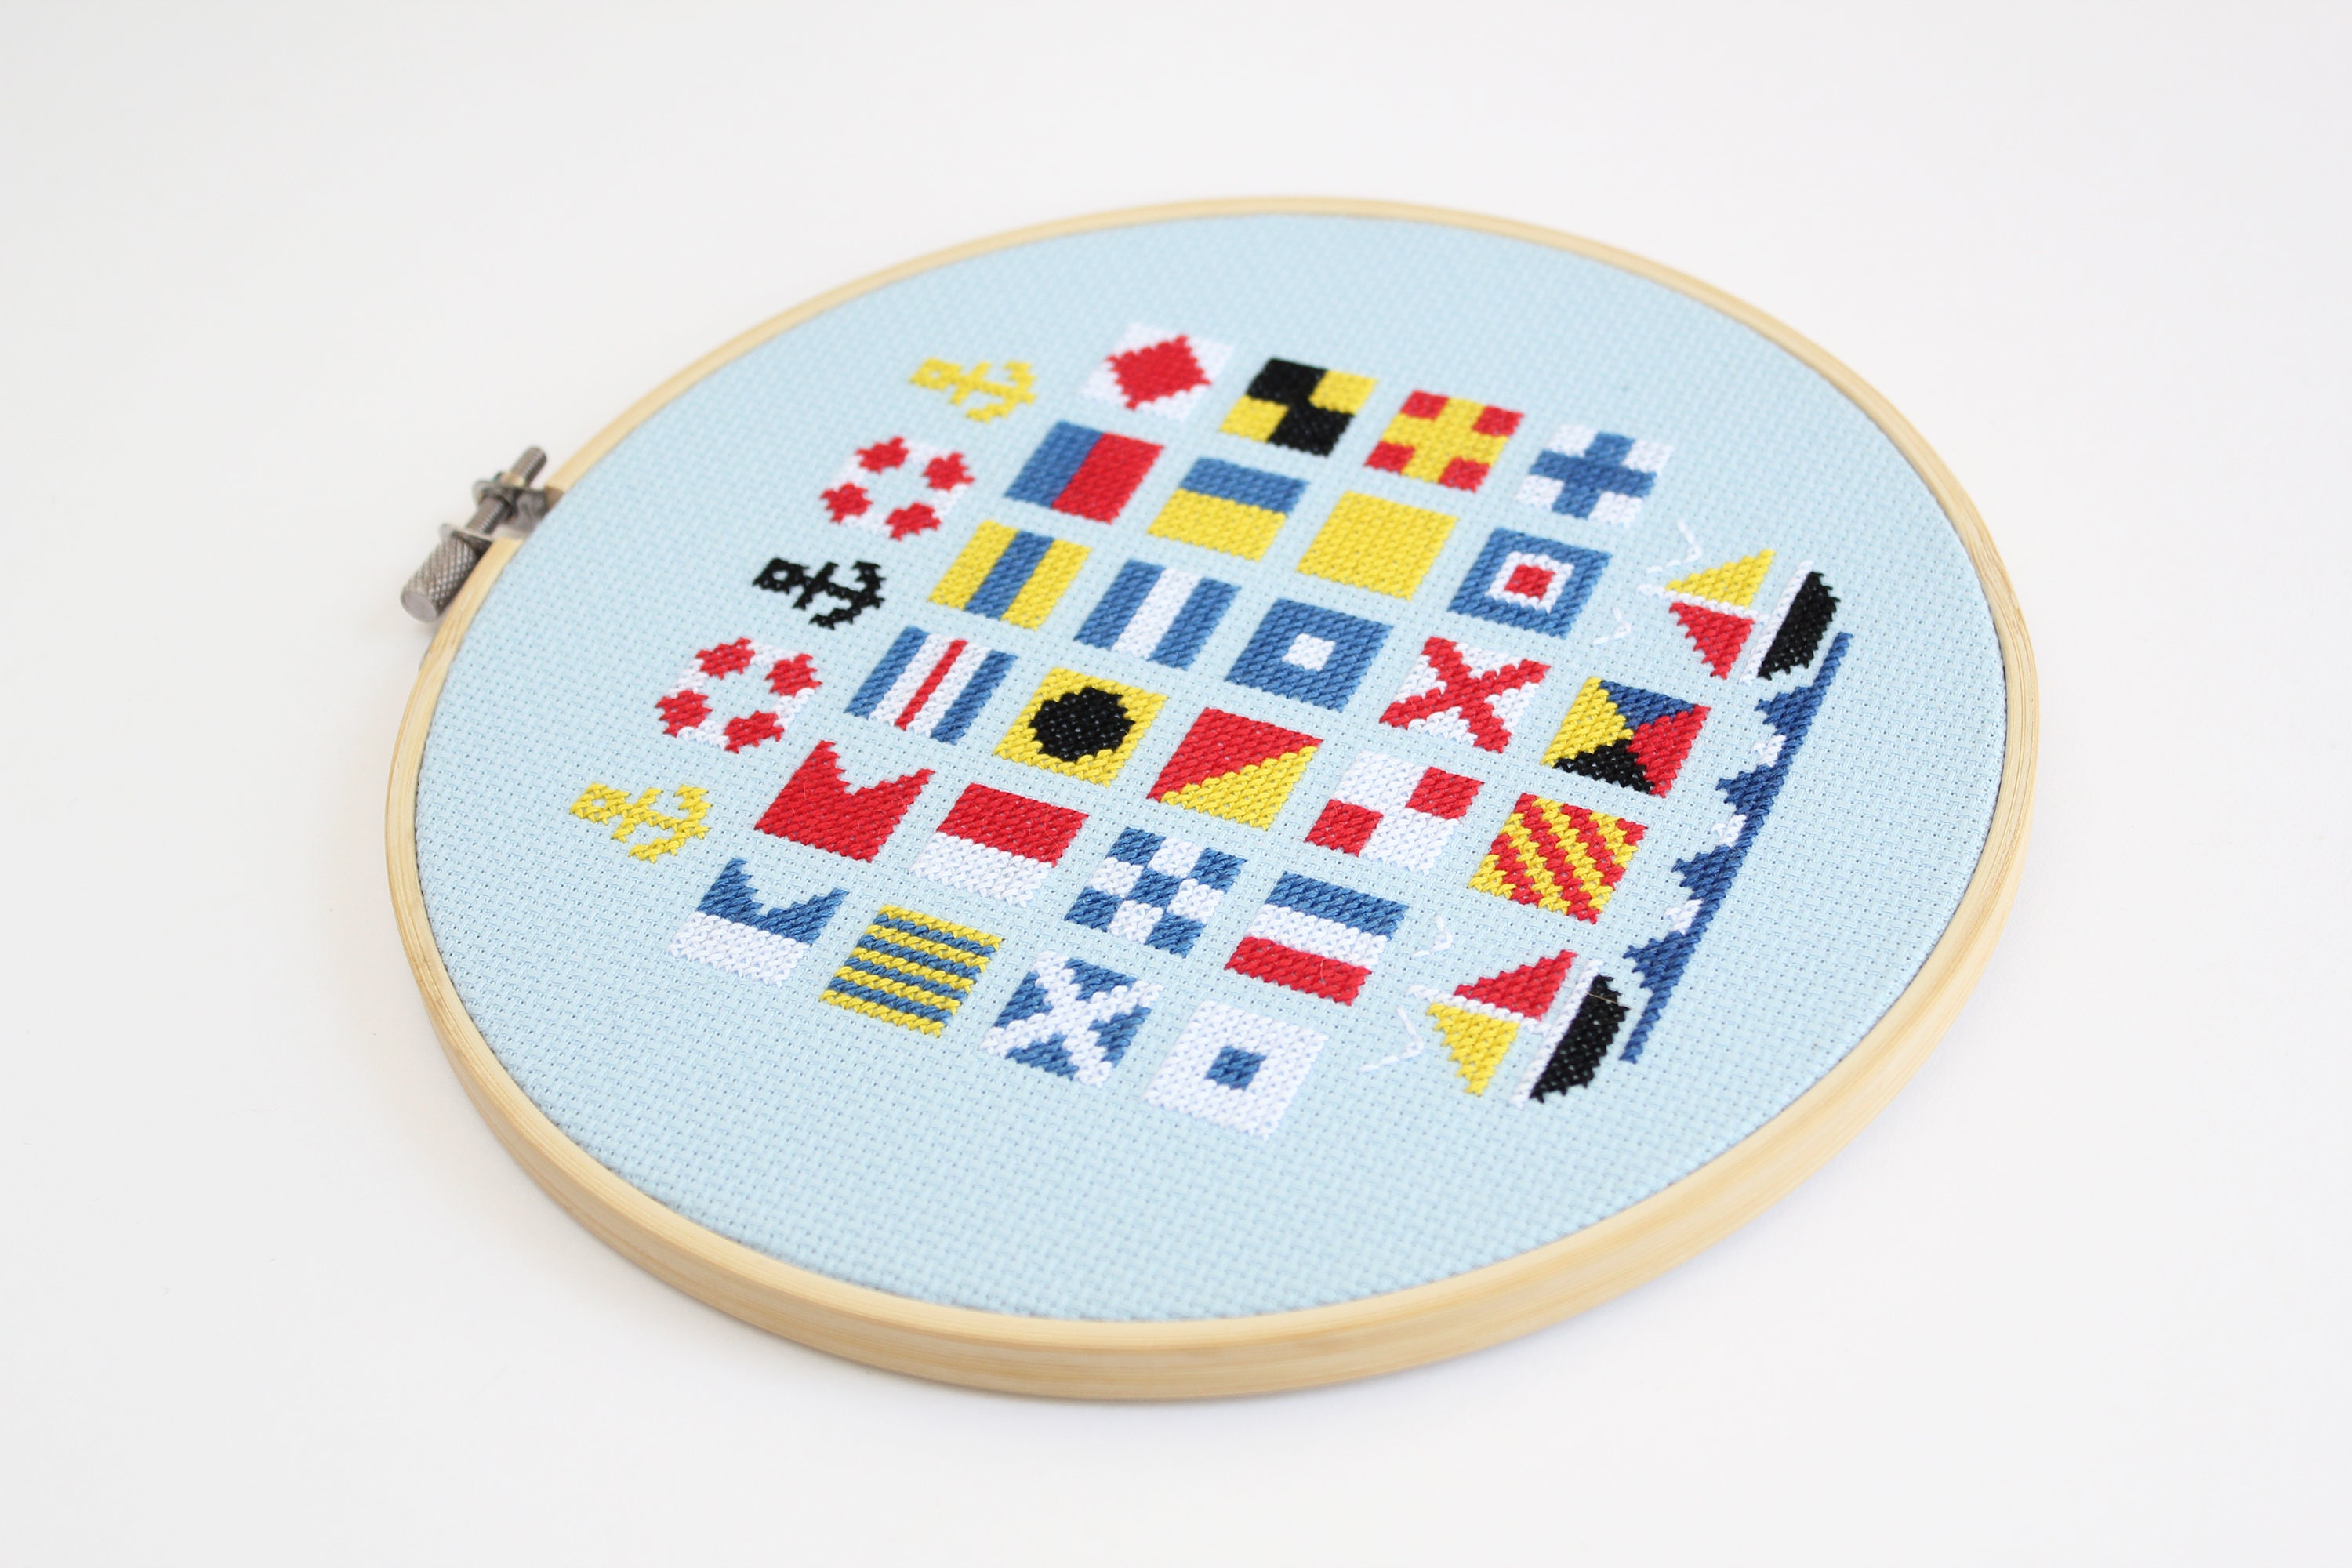 Midnight Marigolds Modern DIY Cross Stitch Kit Beginners Cross